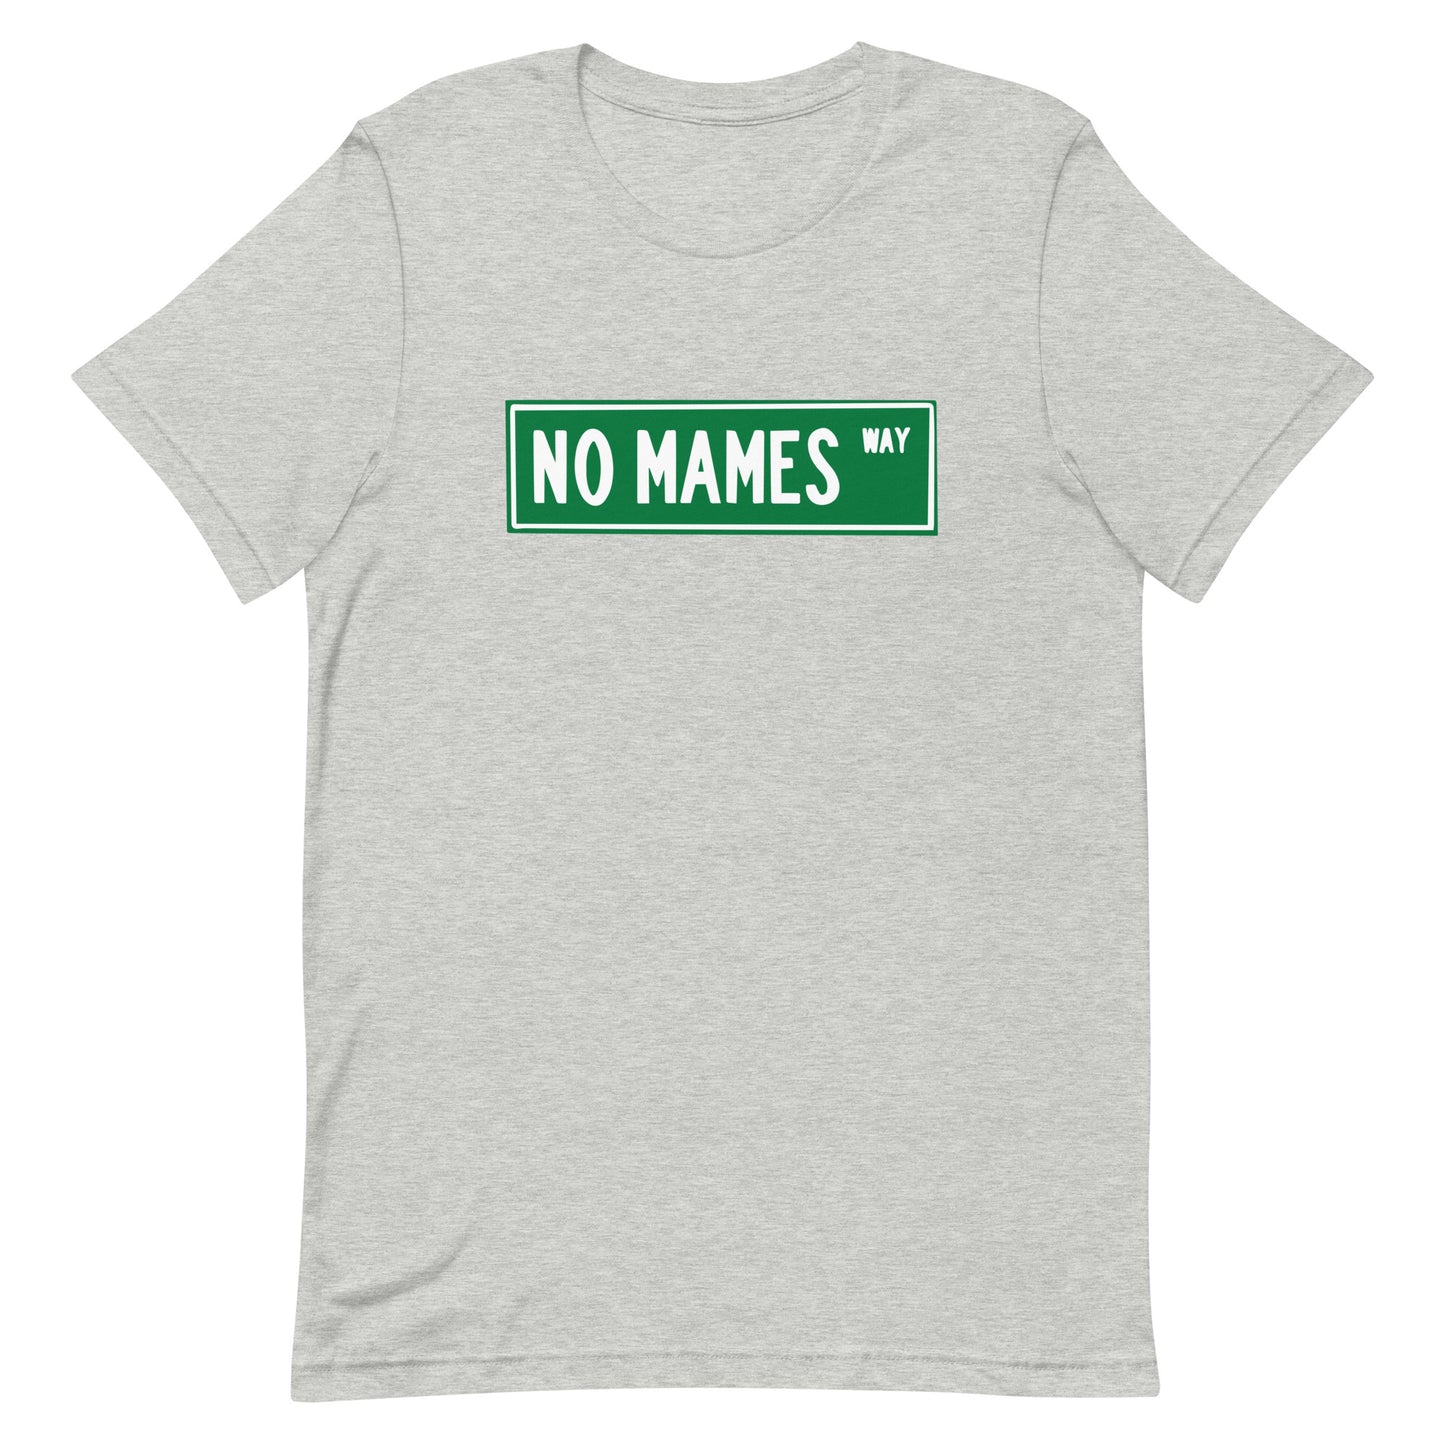 No Mames Way T-Shirt Premium Quality